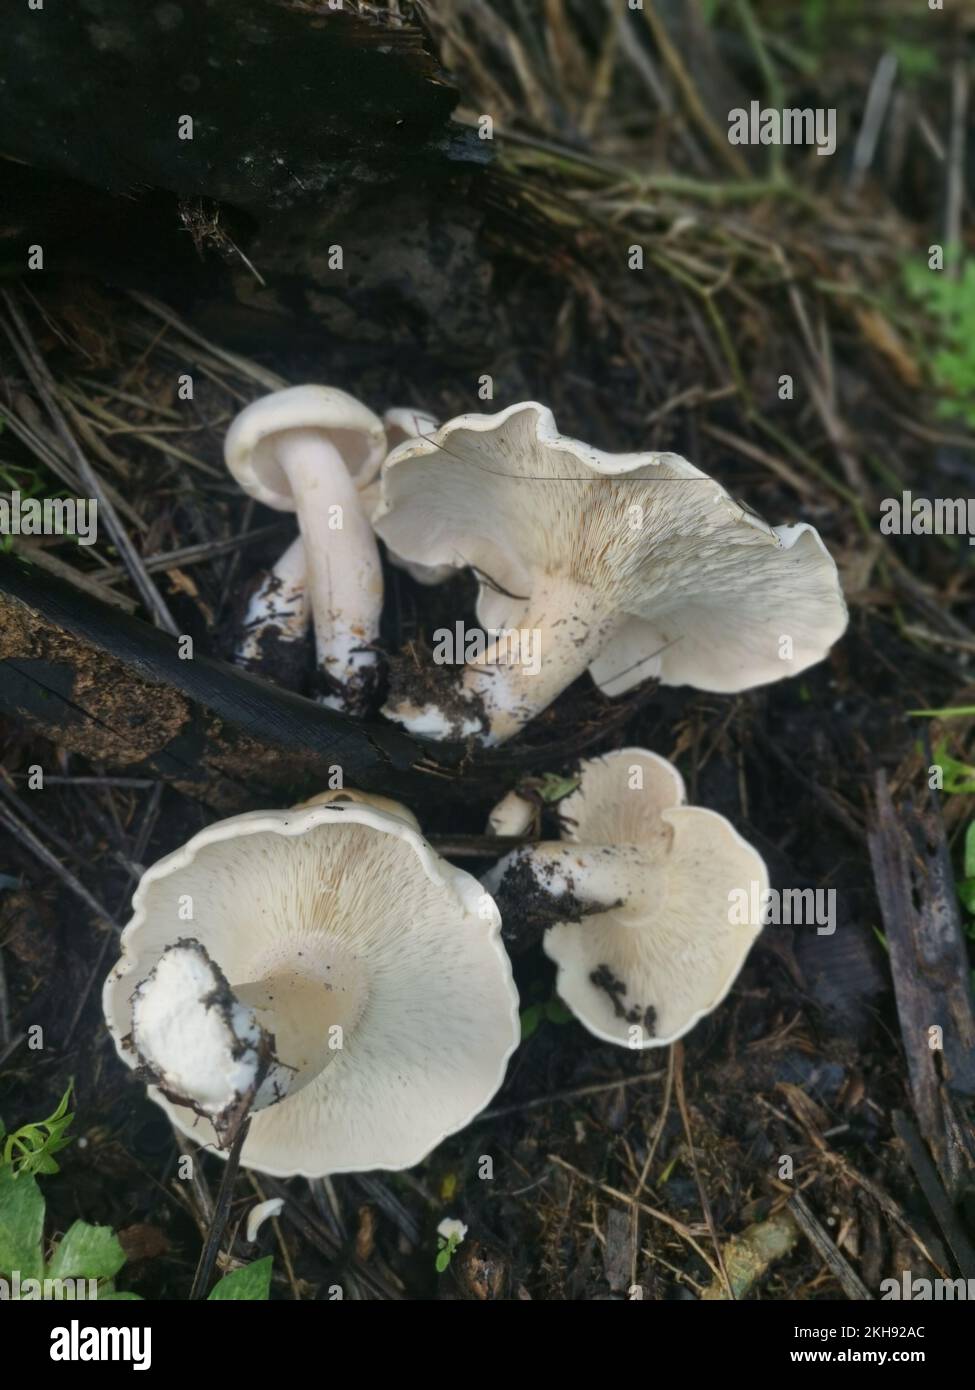 grandi funghi bianchi selvatici di leucopax sul terreno Foto Stock